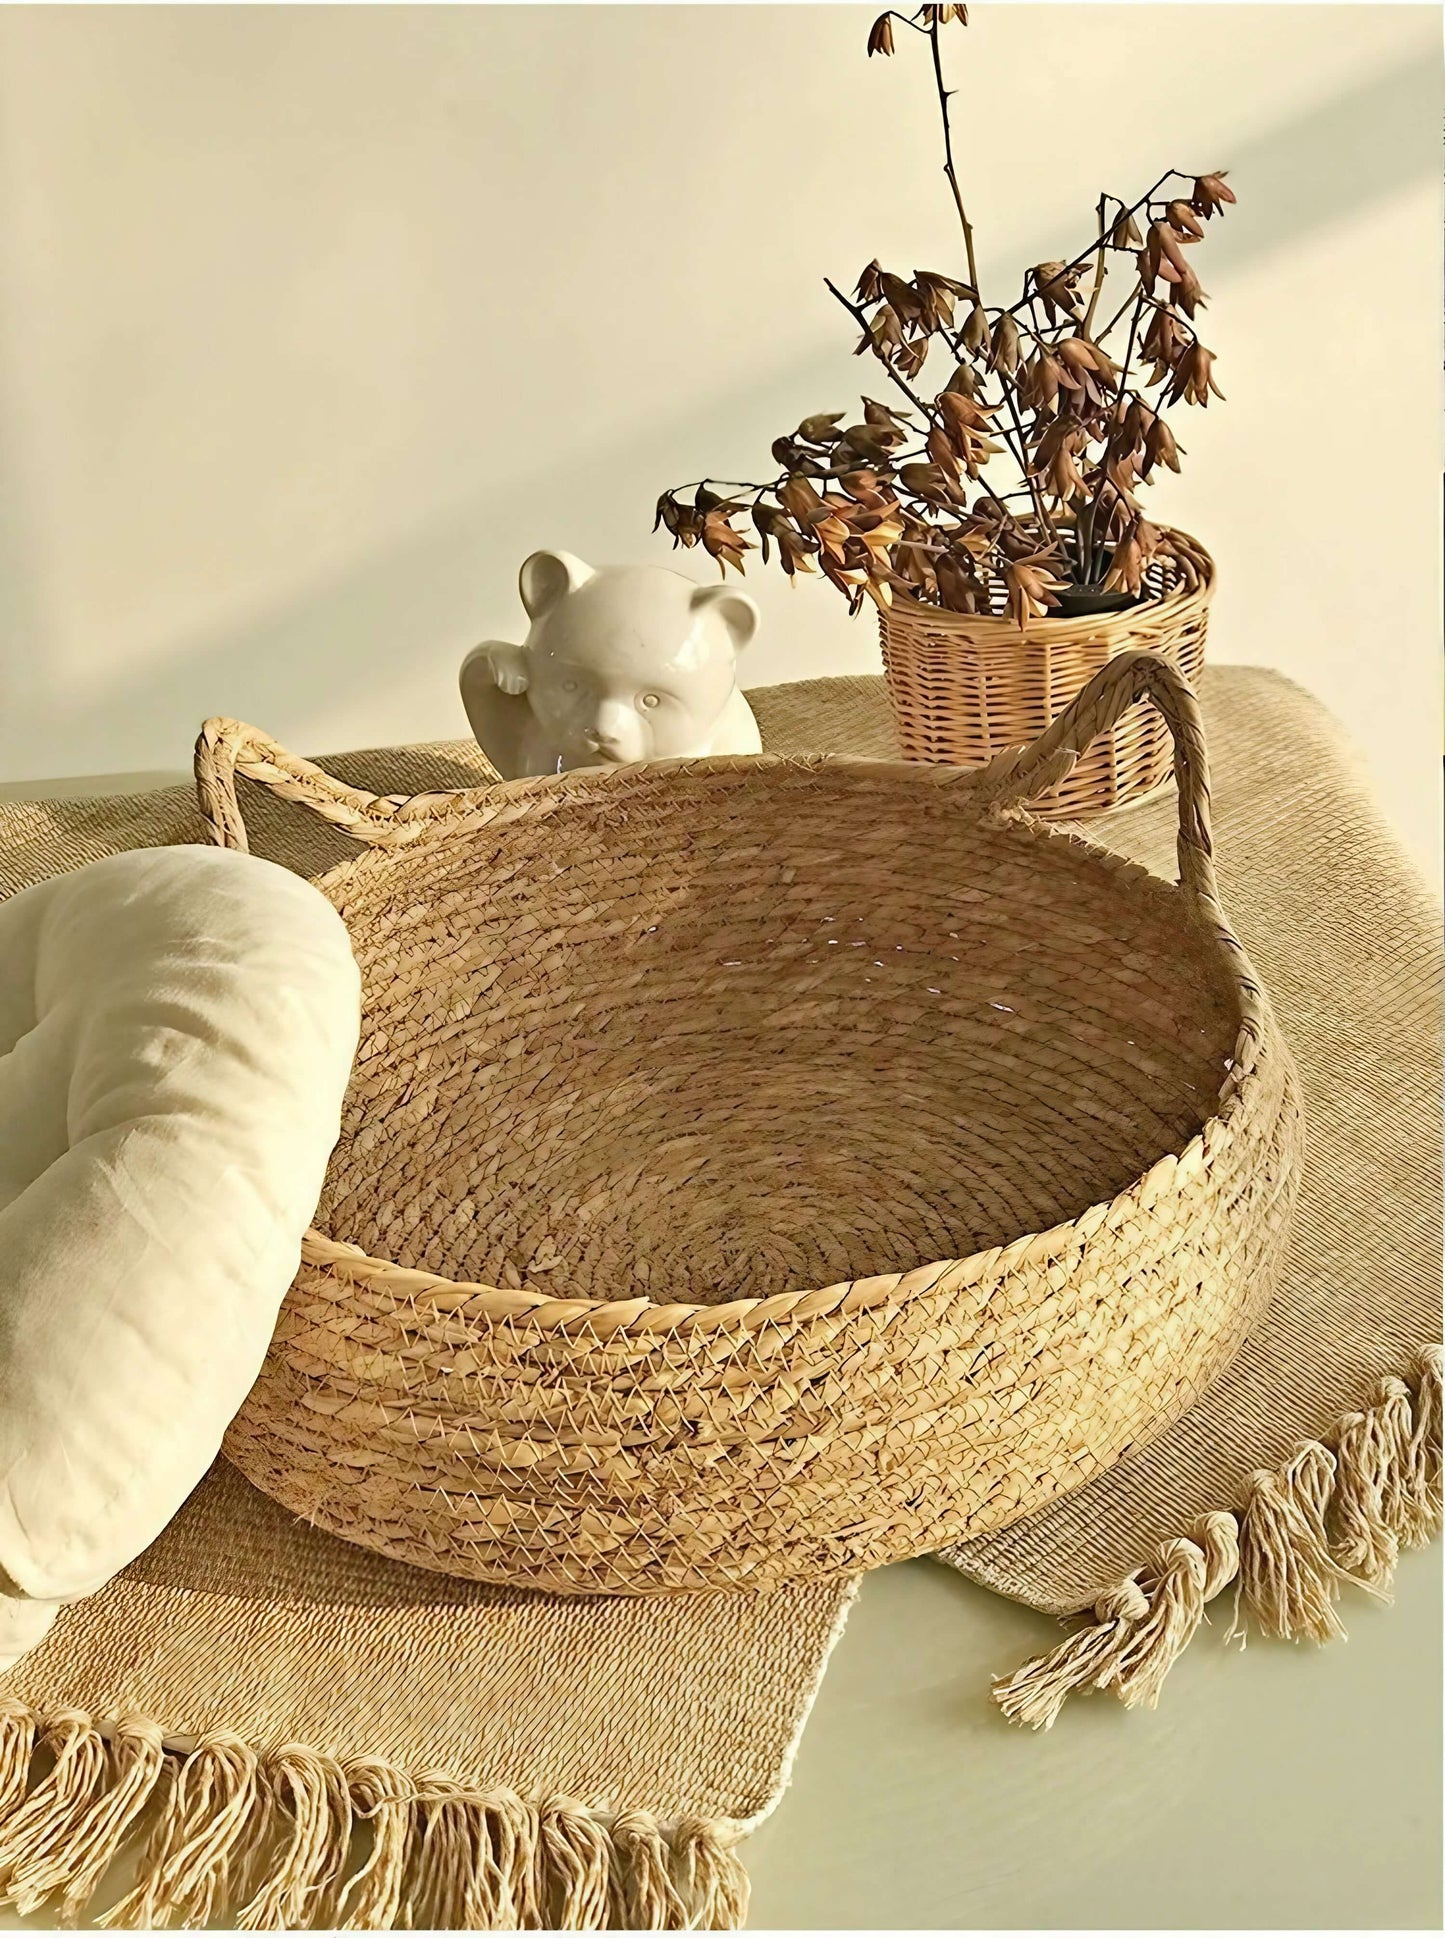 Woodland Kitty Basket Bed